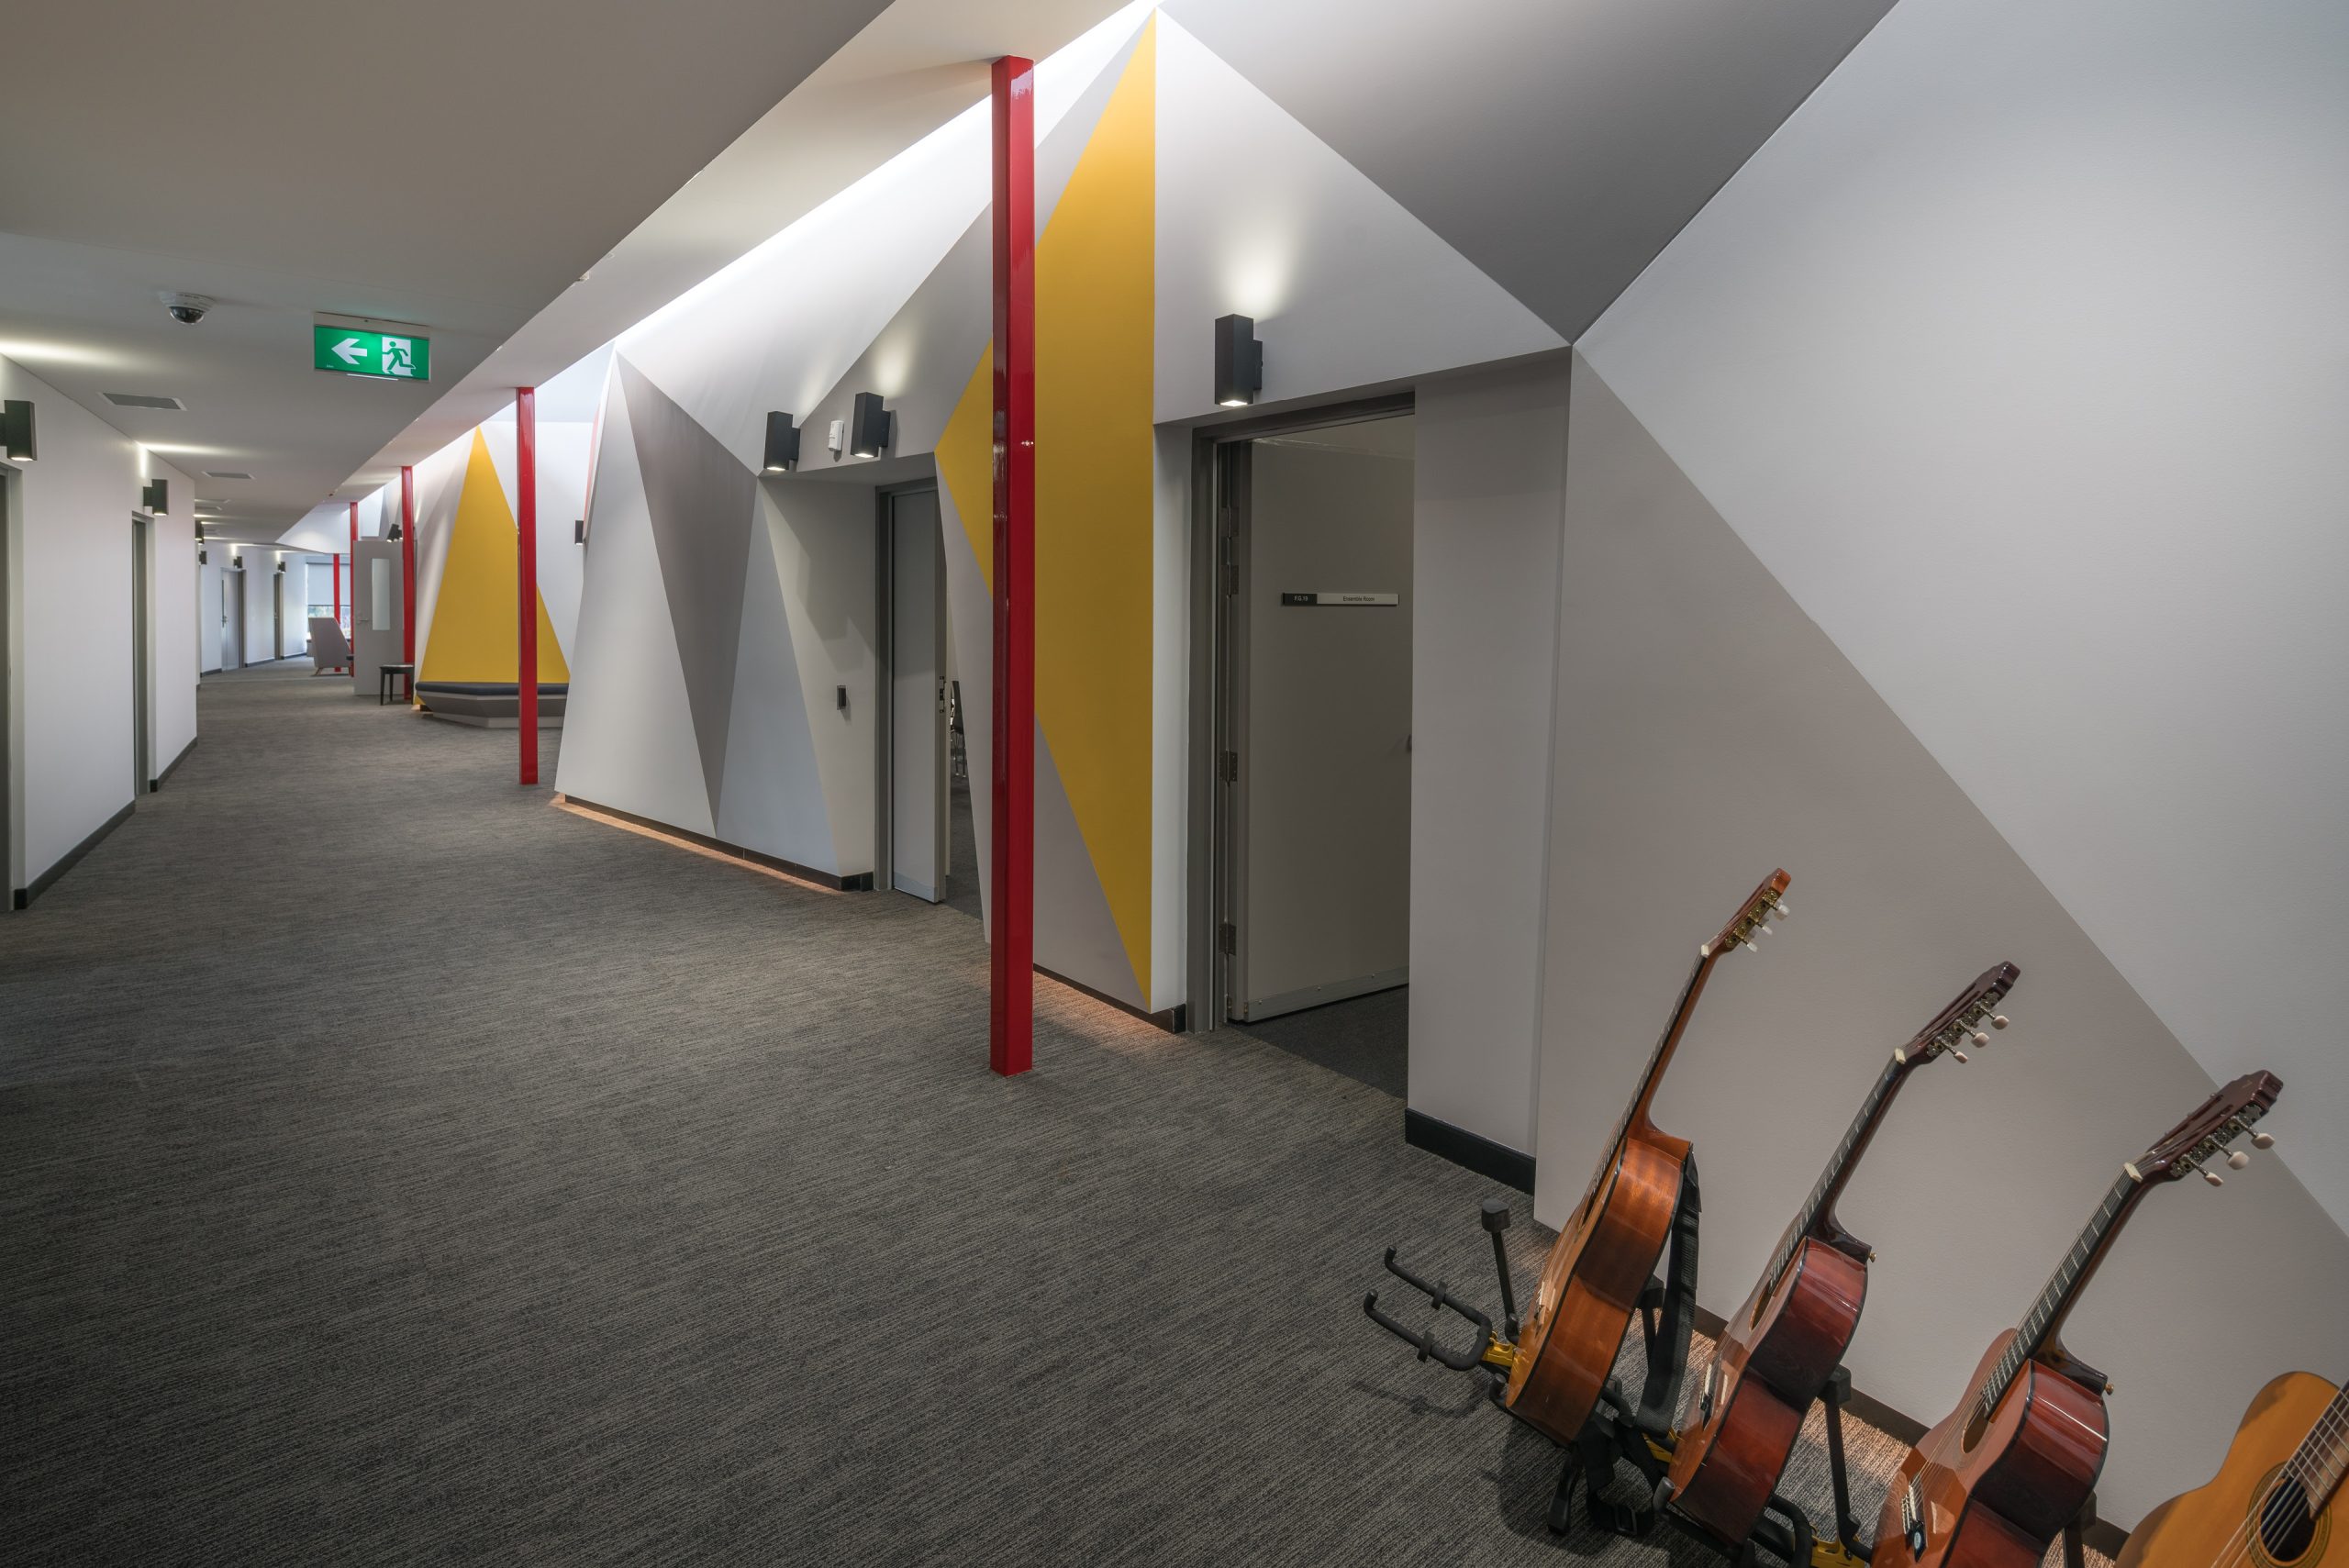 4 corridor guitars wsu music precinct taylor construction education fitout